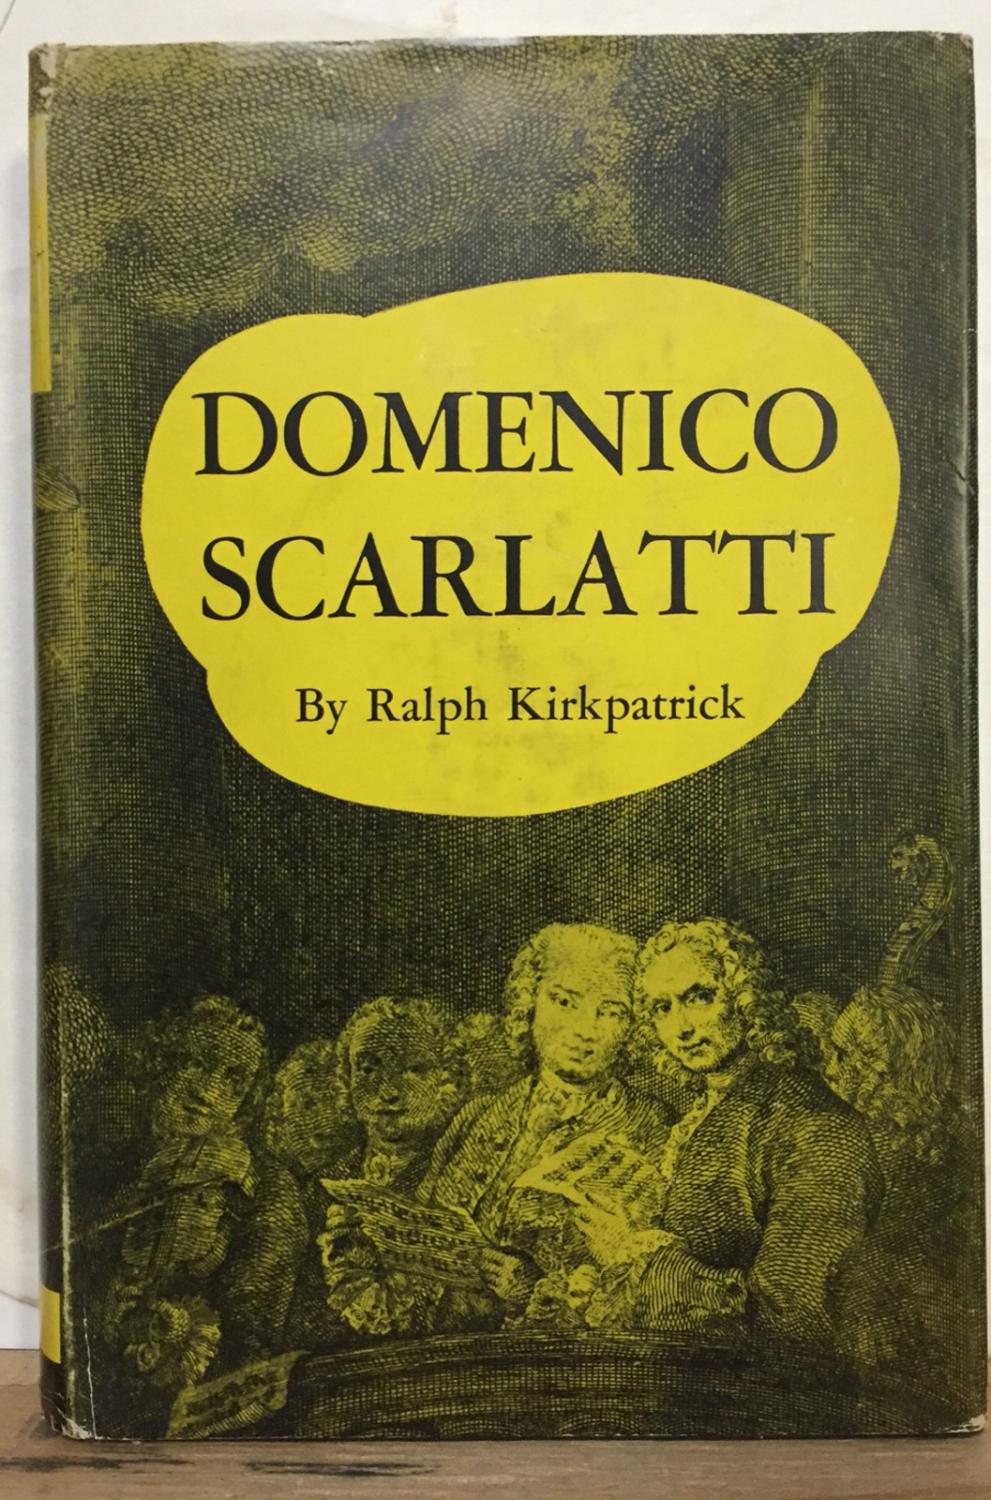 Image result for scarlatti book by ralph kirkpatrick